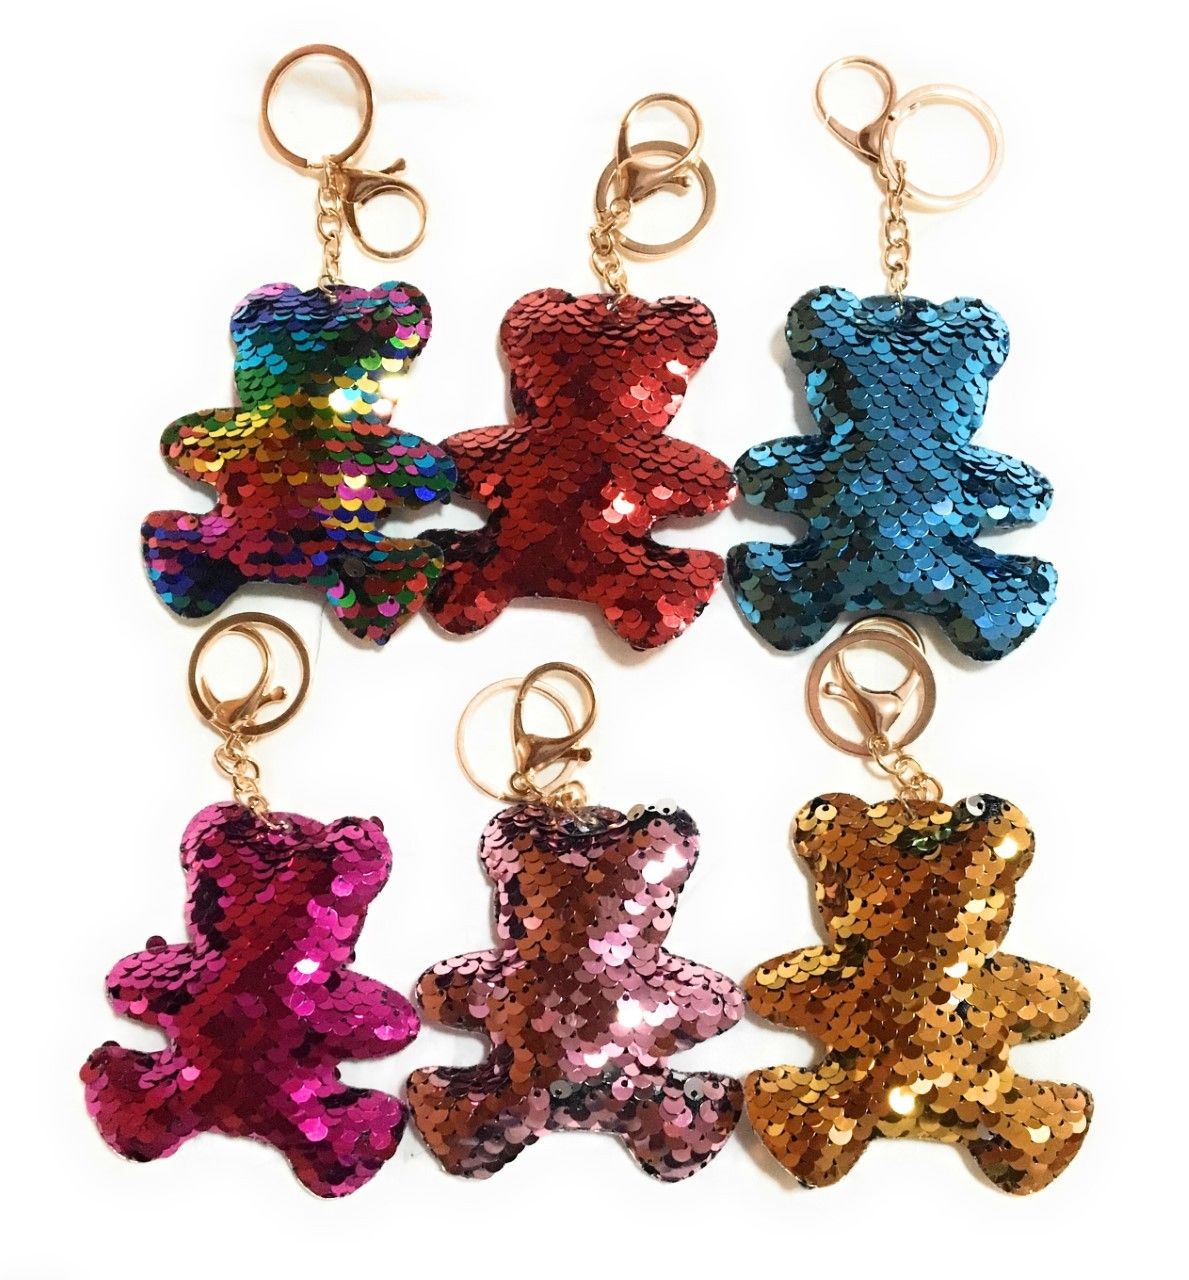 SEQUIN Bear Keychain Keyring Handbag Bag Charm Girls Xmas Stocking Party Bag Filler